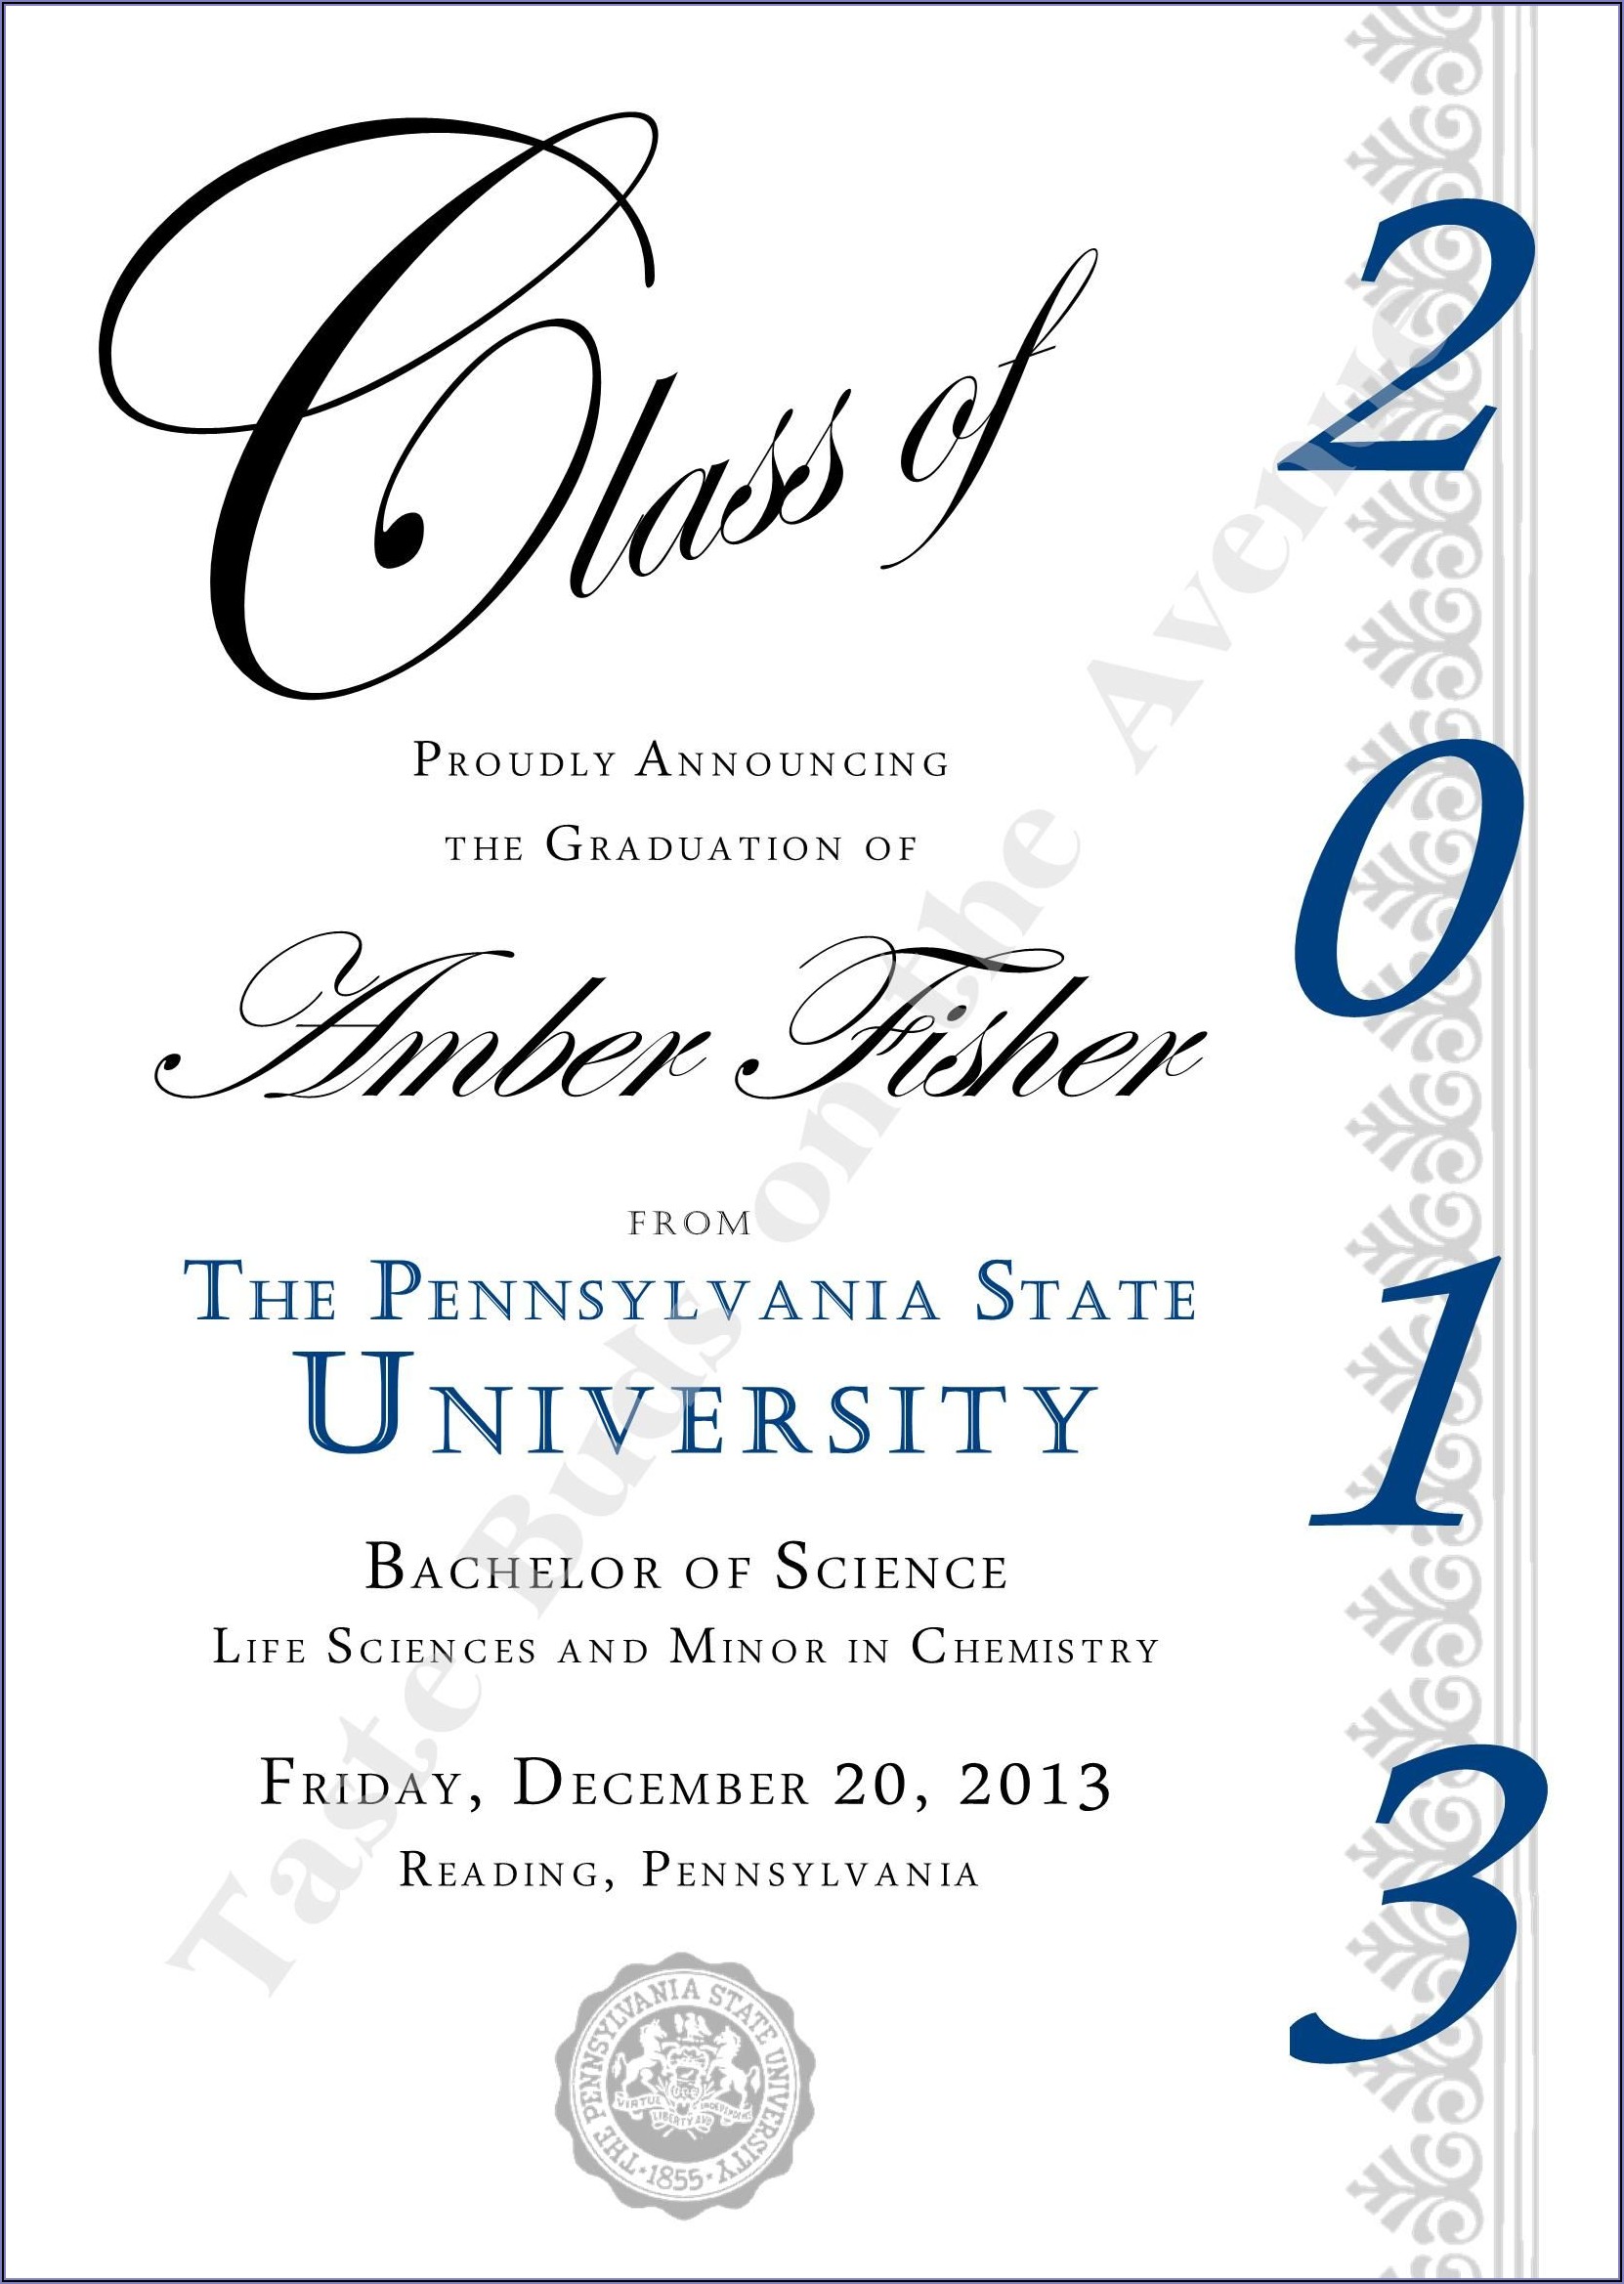 Penn State Graduation Invitation